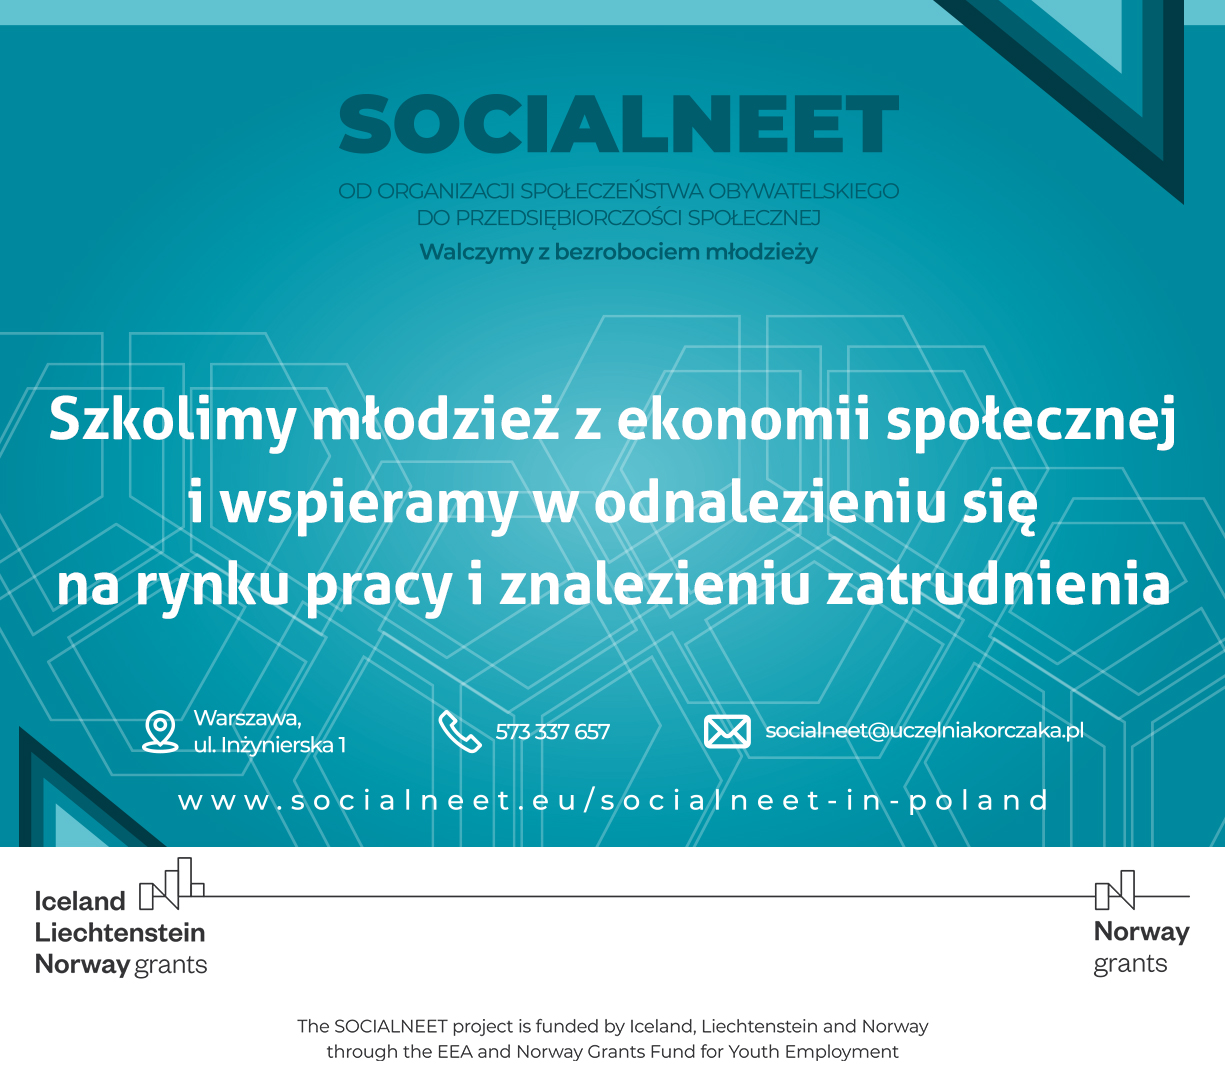 Socialneet, baner informacyjny